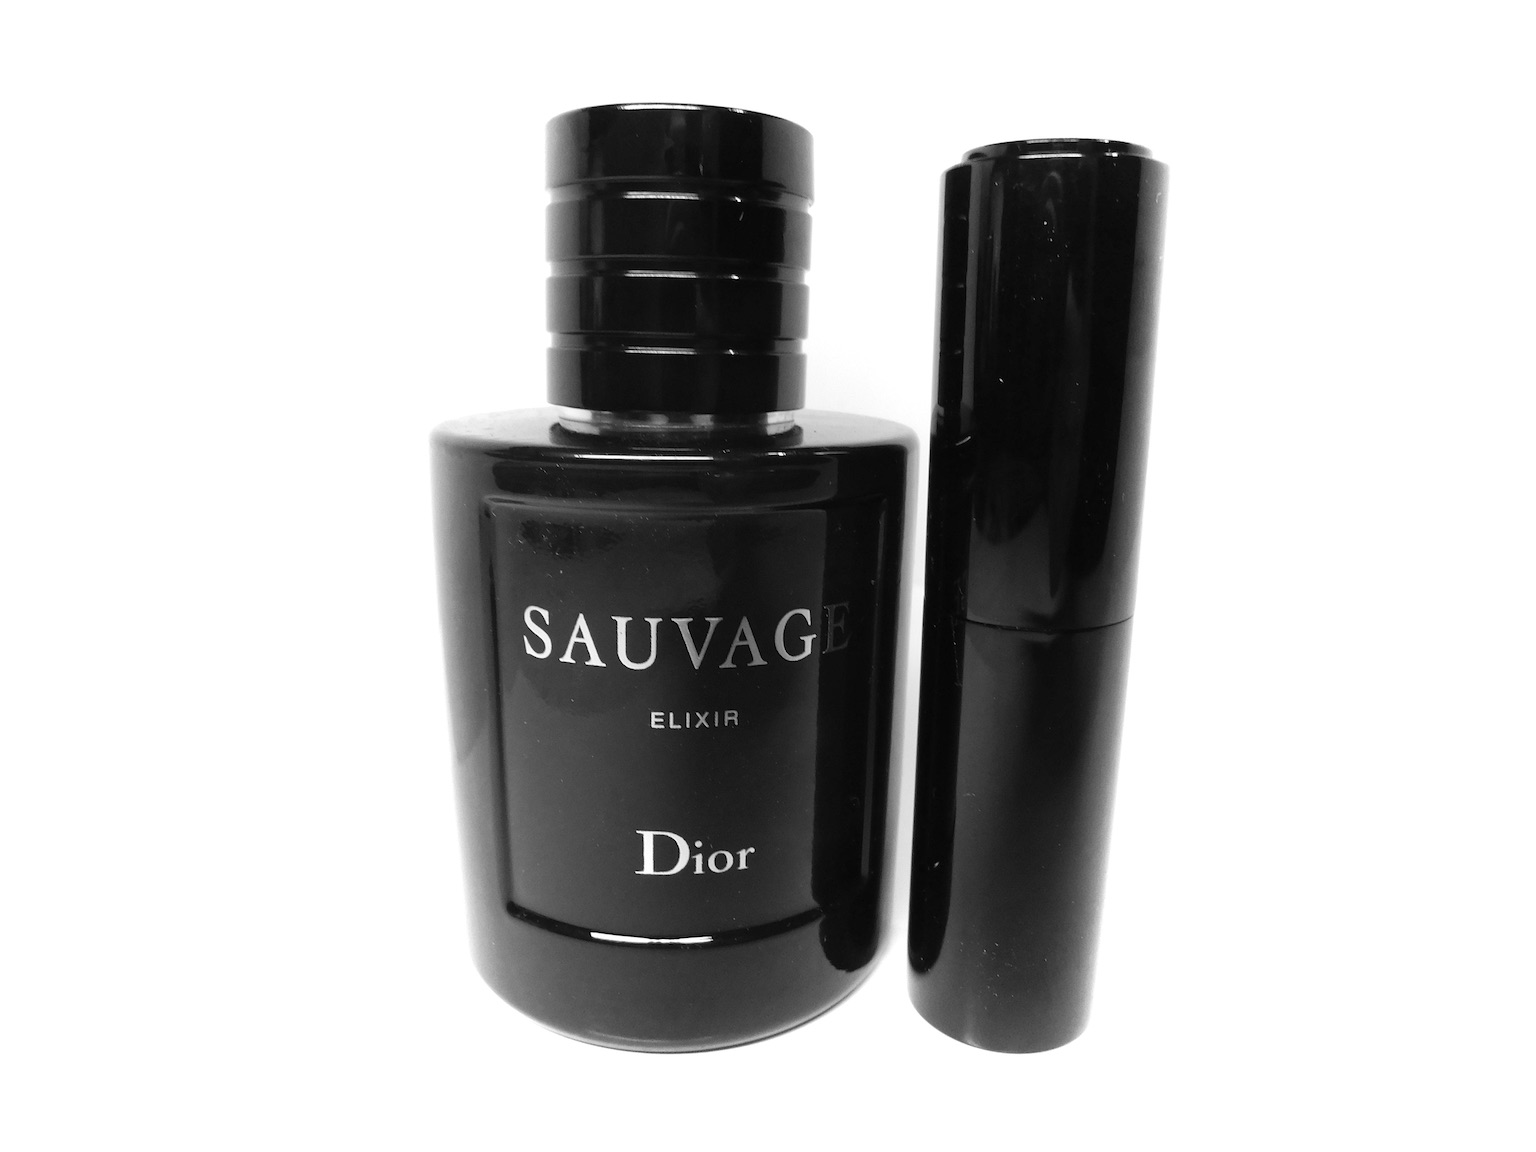 Dior Sauvage Elixir, Fragrance Sample